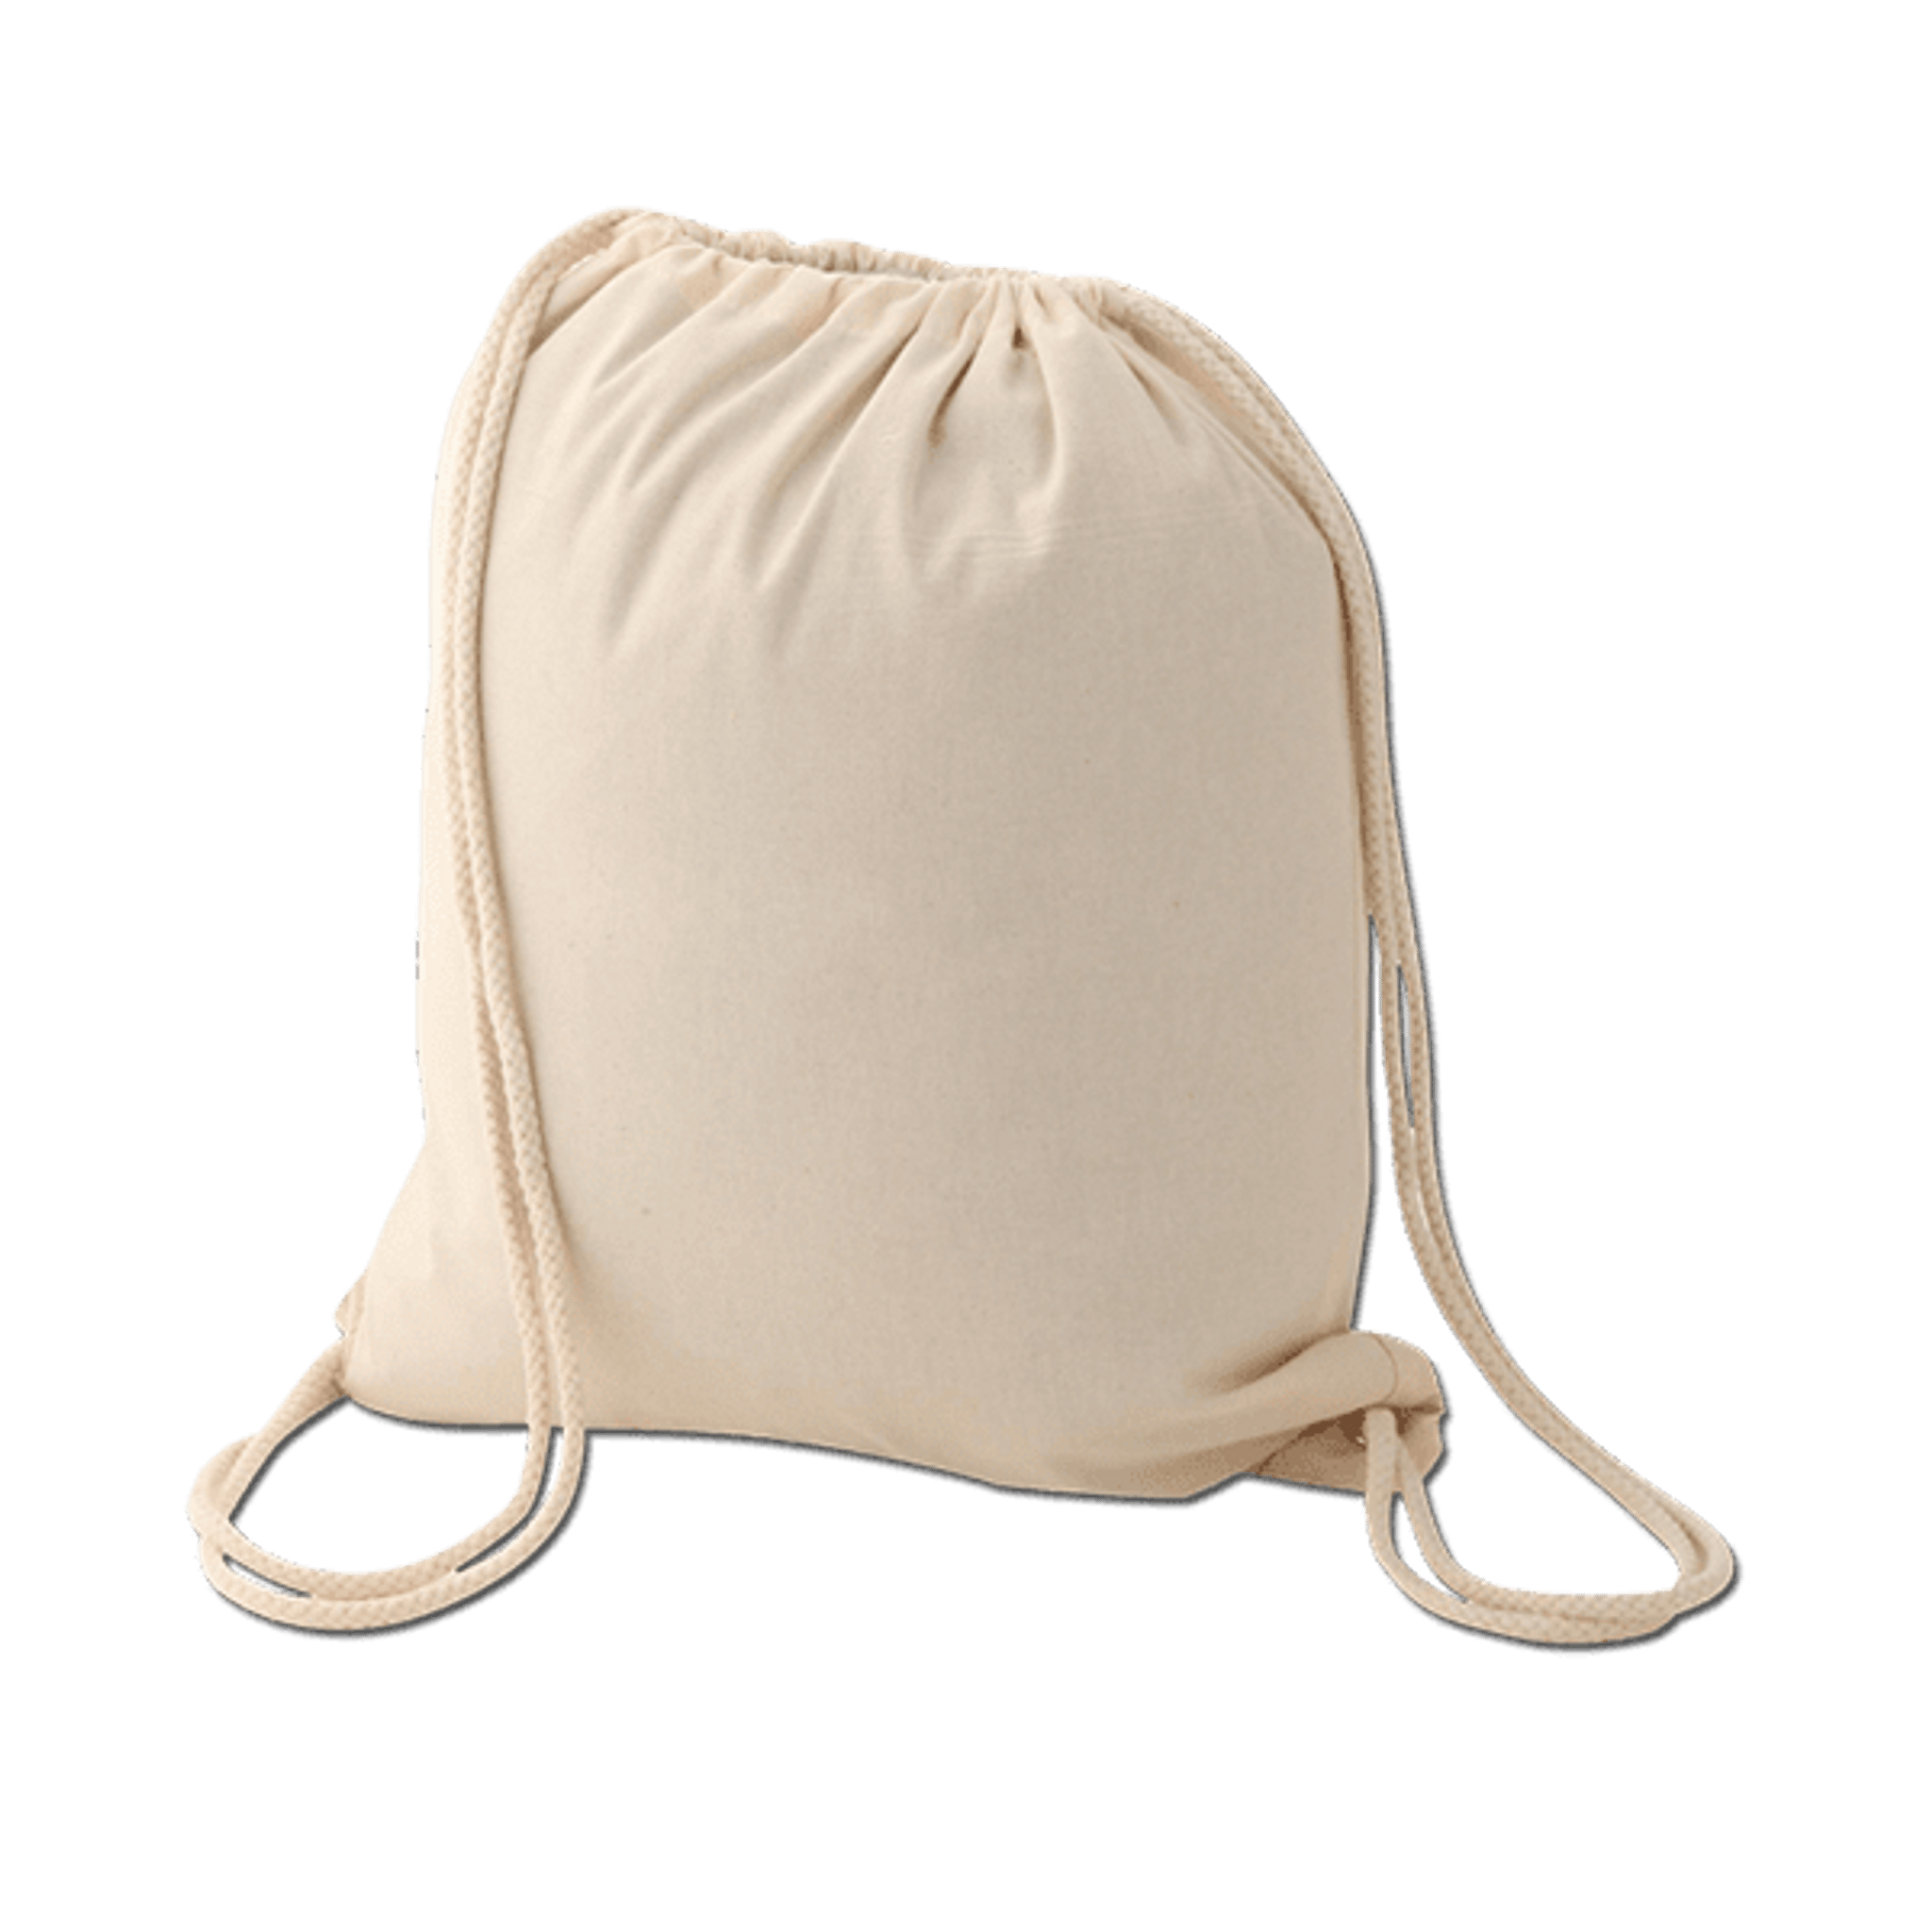 Custom Boutique Name Favor String Bag Logo Printed Muslin Bags